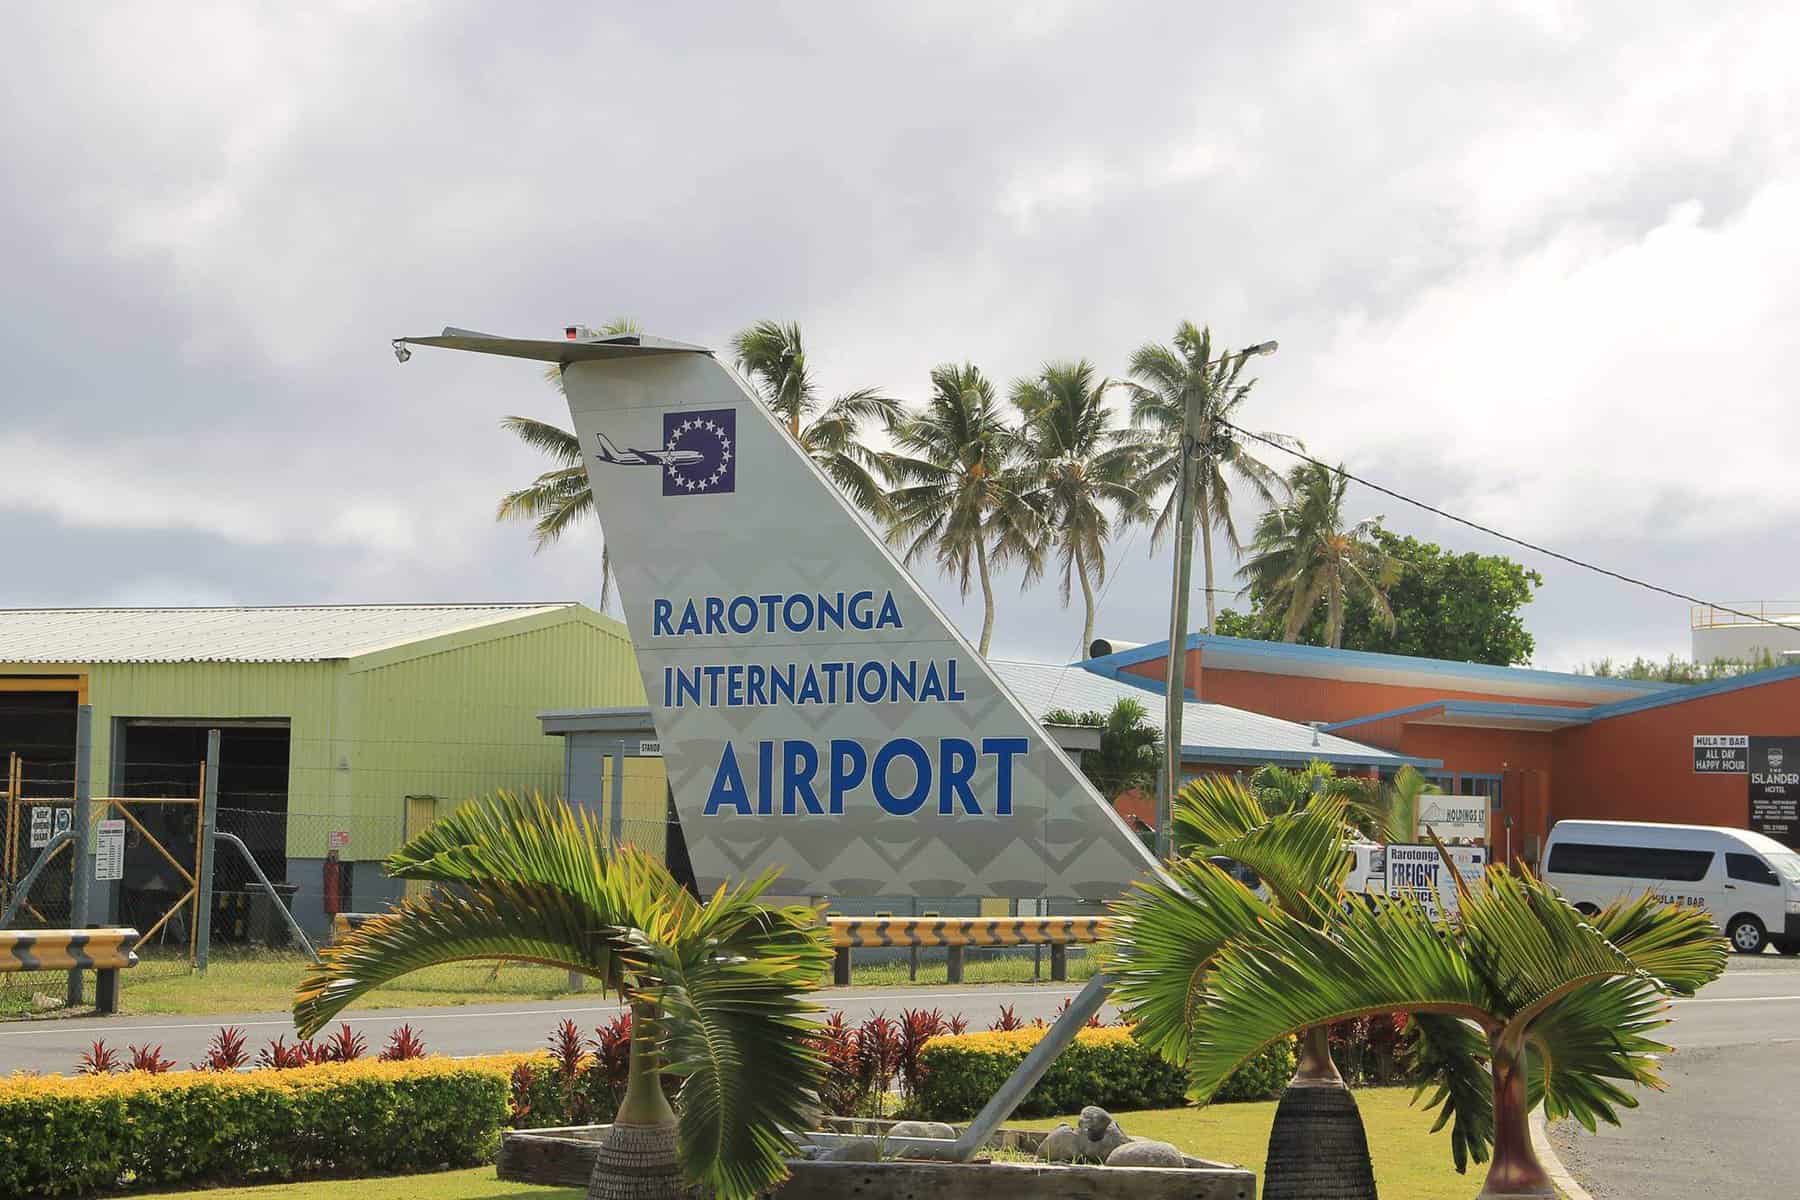 Rarotonga airport sign